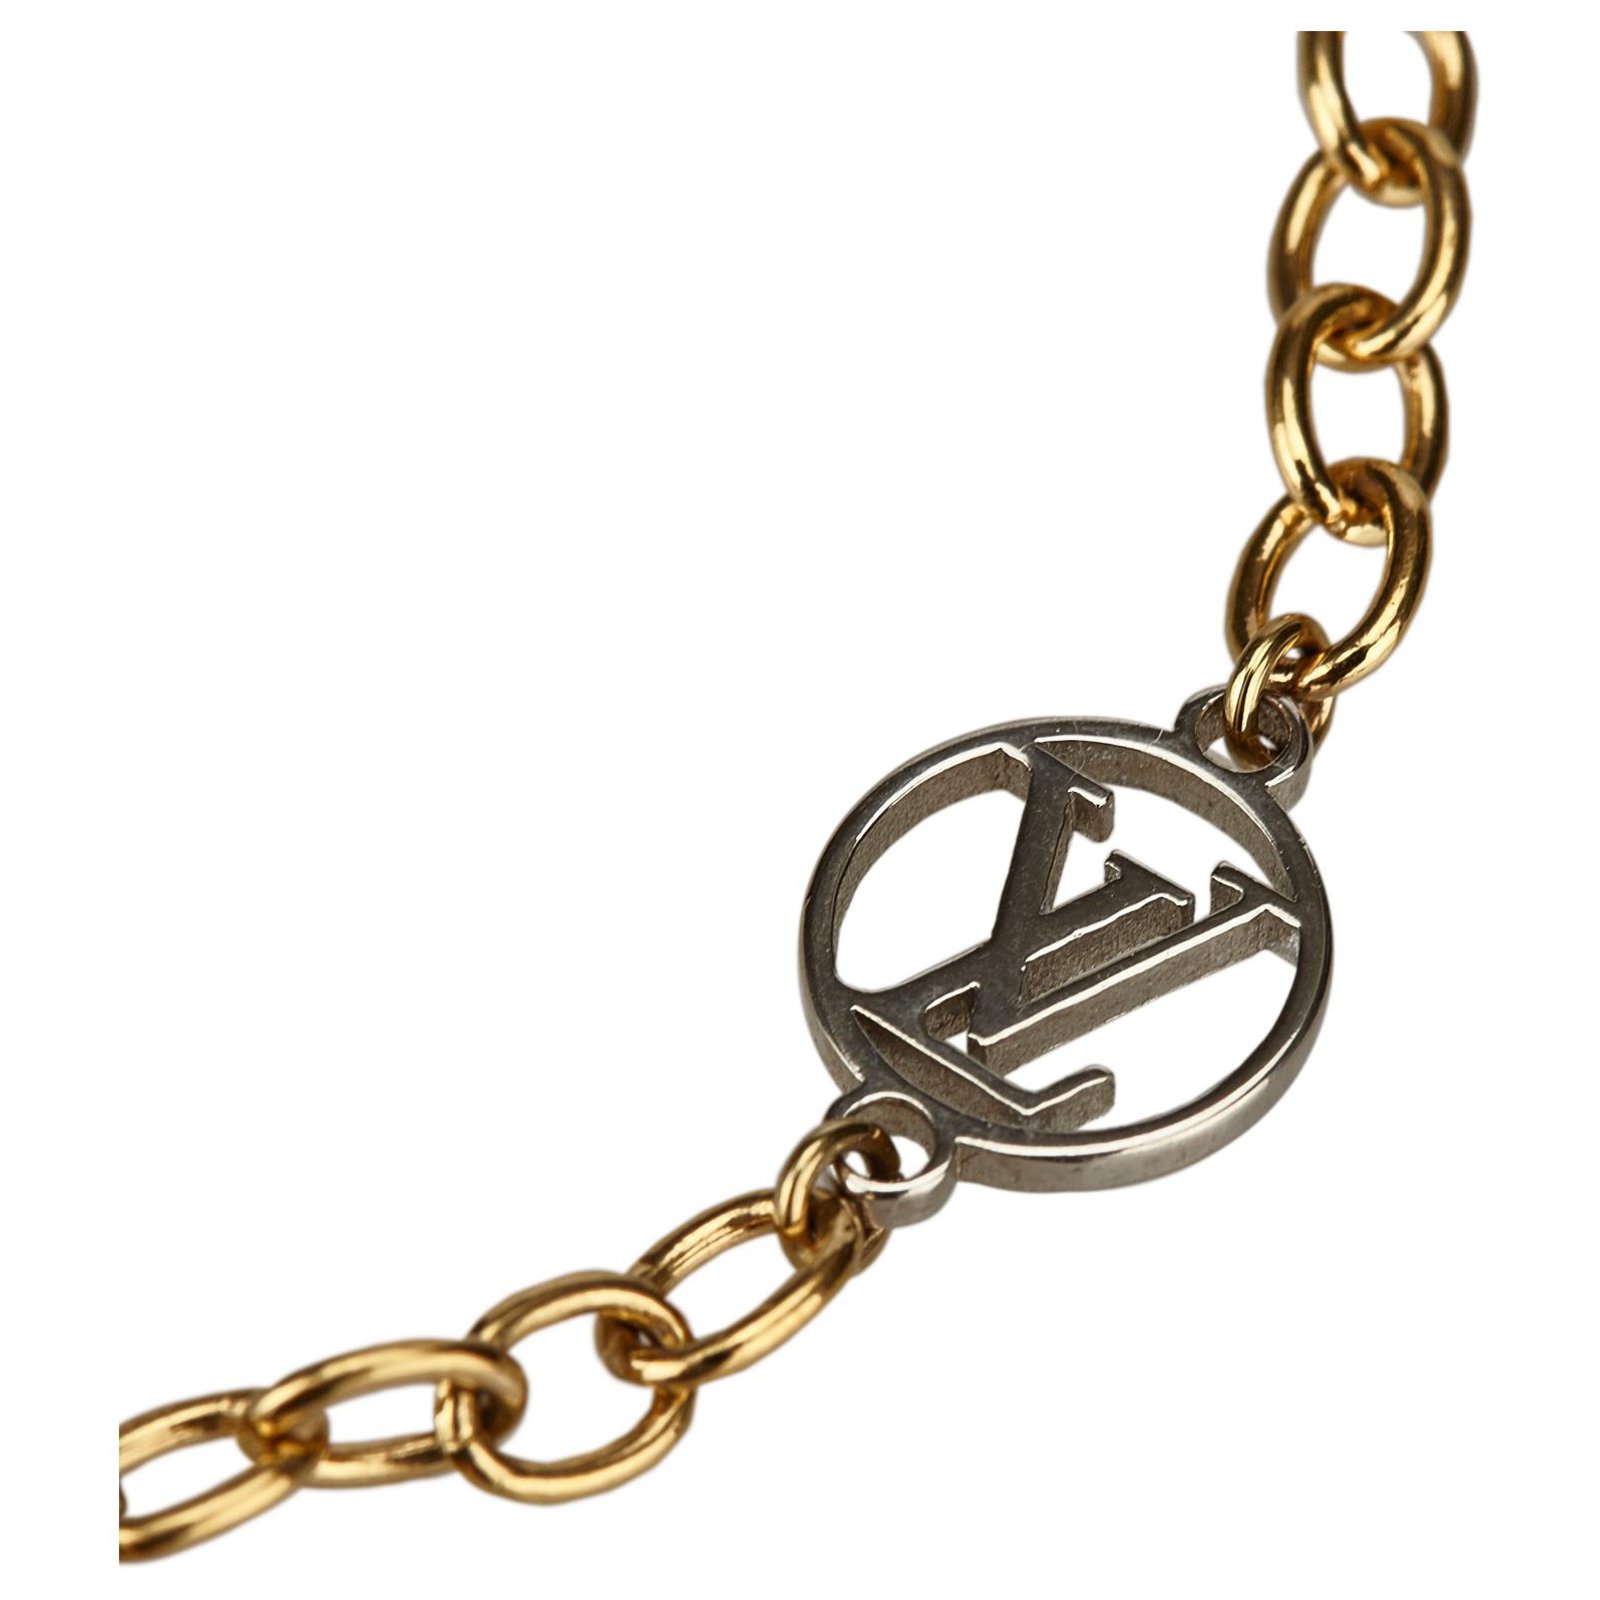 Louis Vuitton Logomania Bracelet - Gold-Tone Metal Link, Bracelets